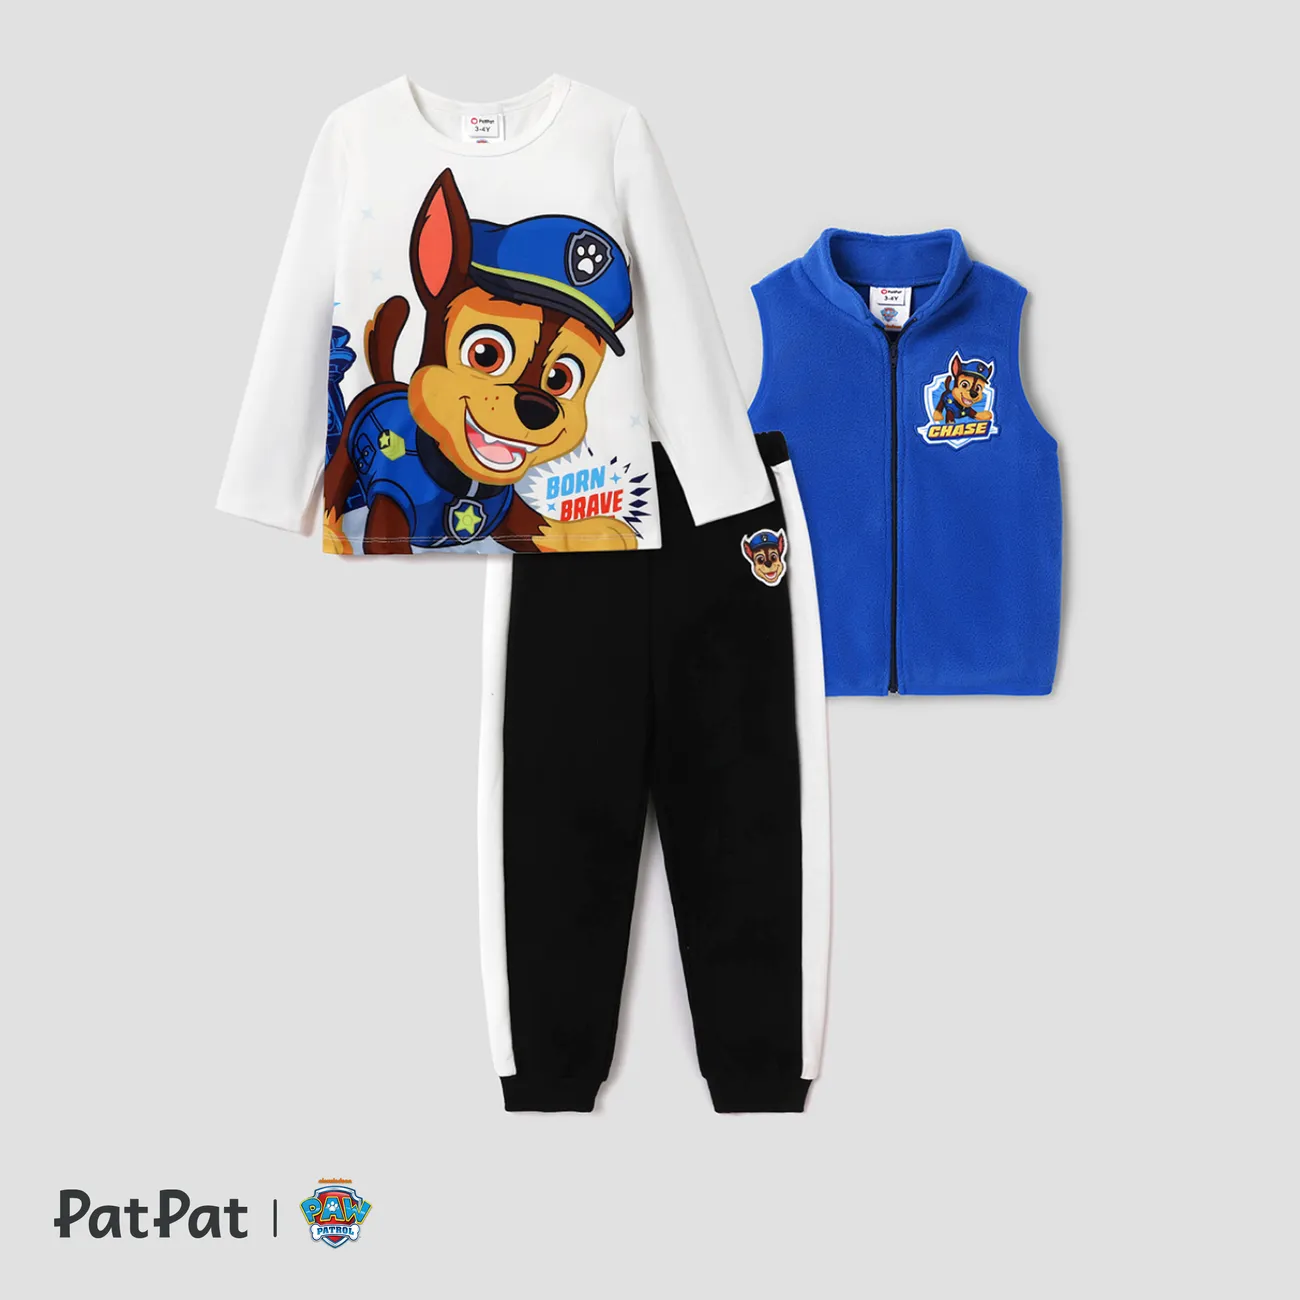 PAW Patrol Toddler Boy Character Print White Top or Blue Waistcoat or Black Pants Blue big image 1